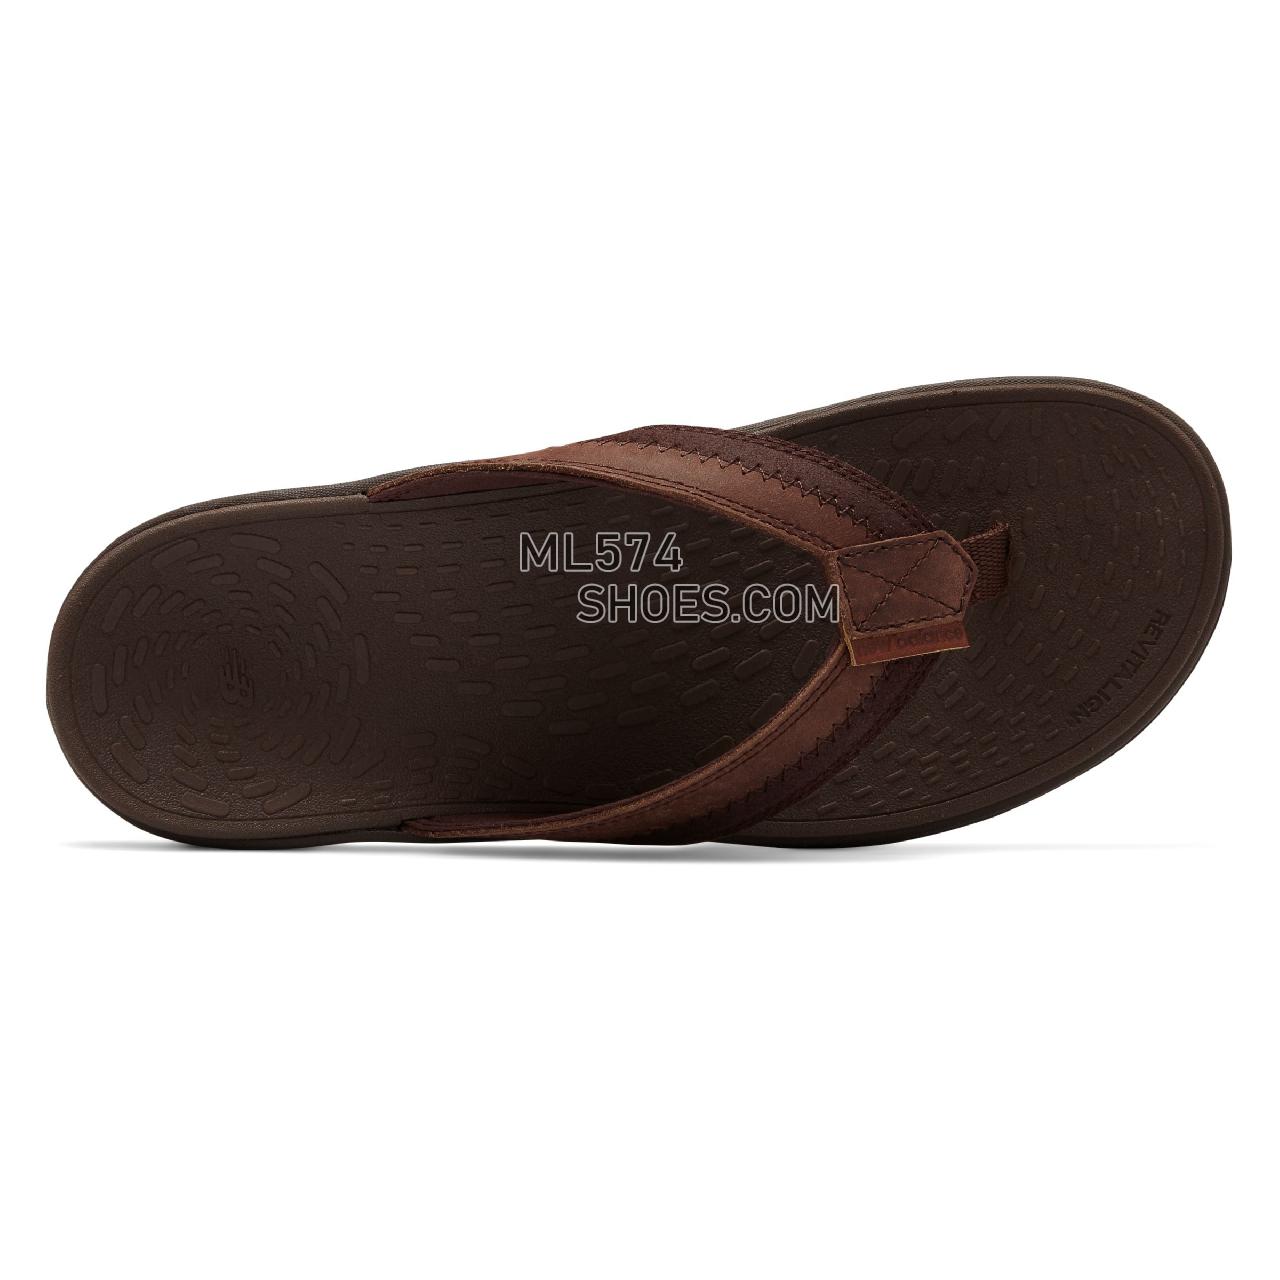 New Balance Pinnacle Flip - Men's 6100 - Sandals Brown - MR6100WSK